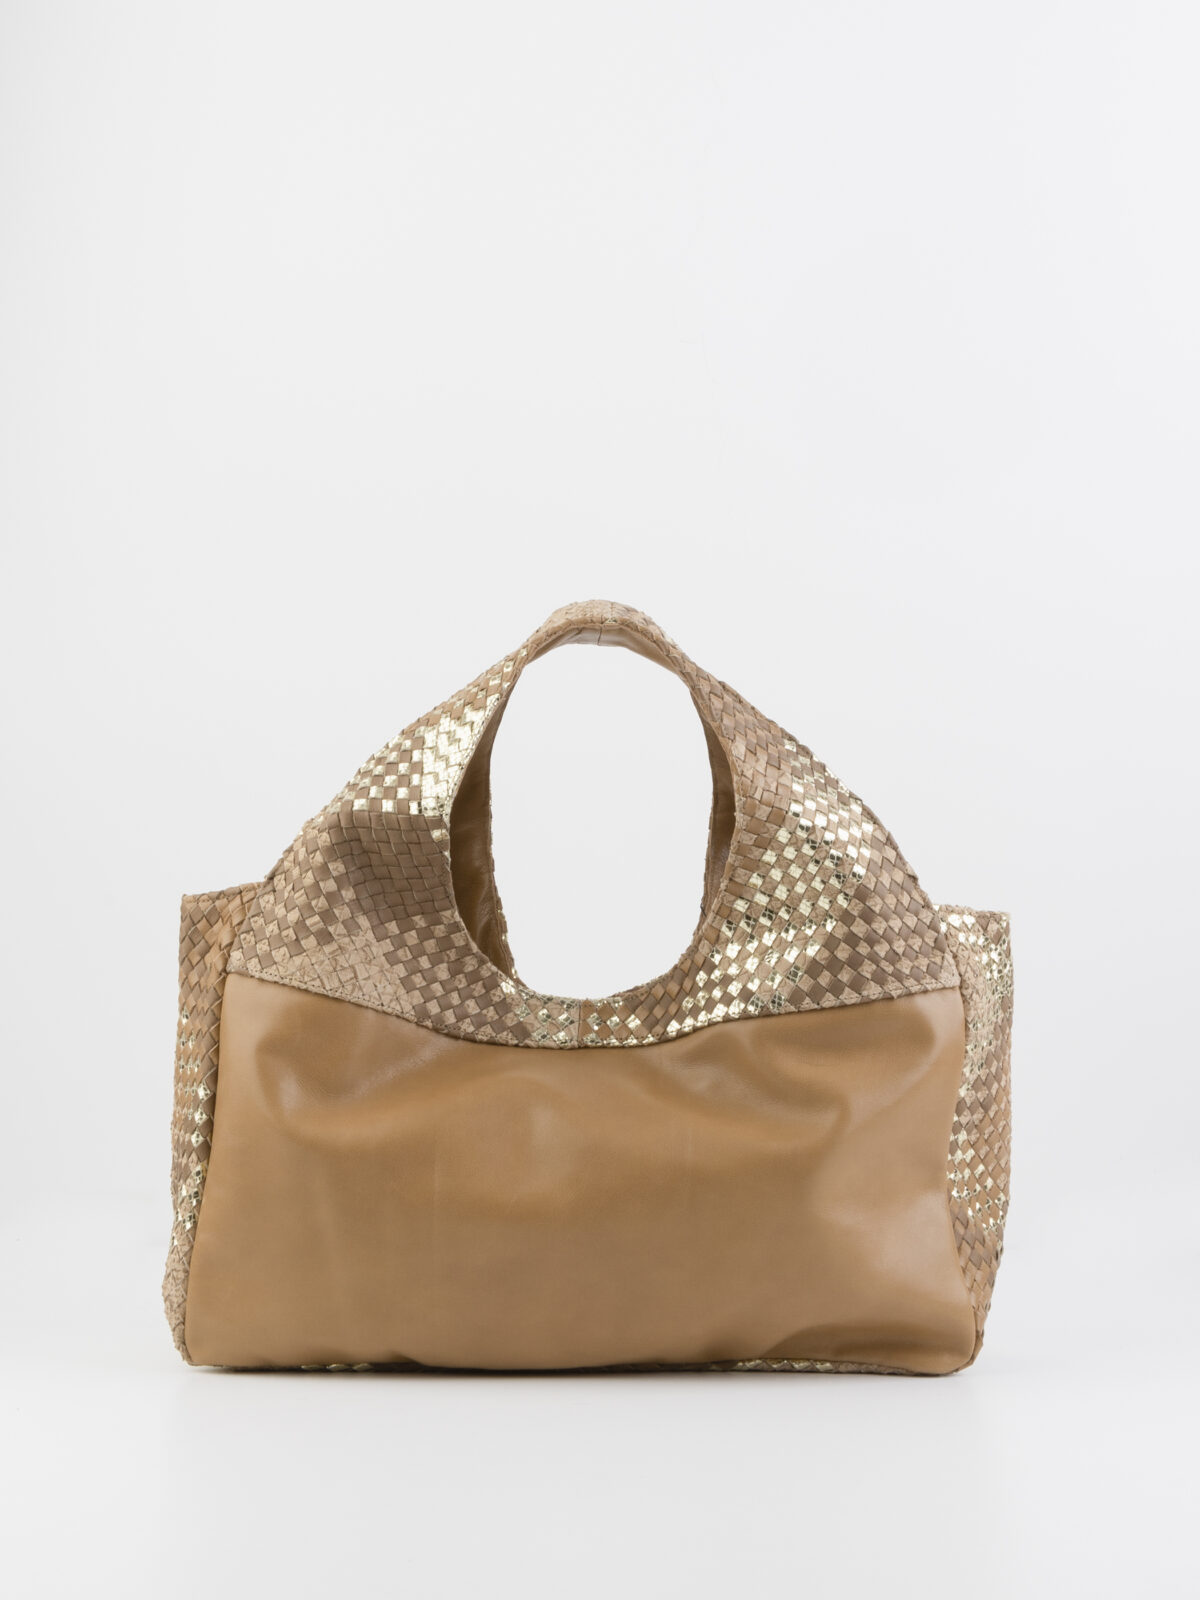 pablo-soft-leather-weaved-bag-handmade-shoulder-taupe-gold-claramonte-matchboxathens